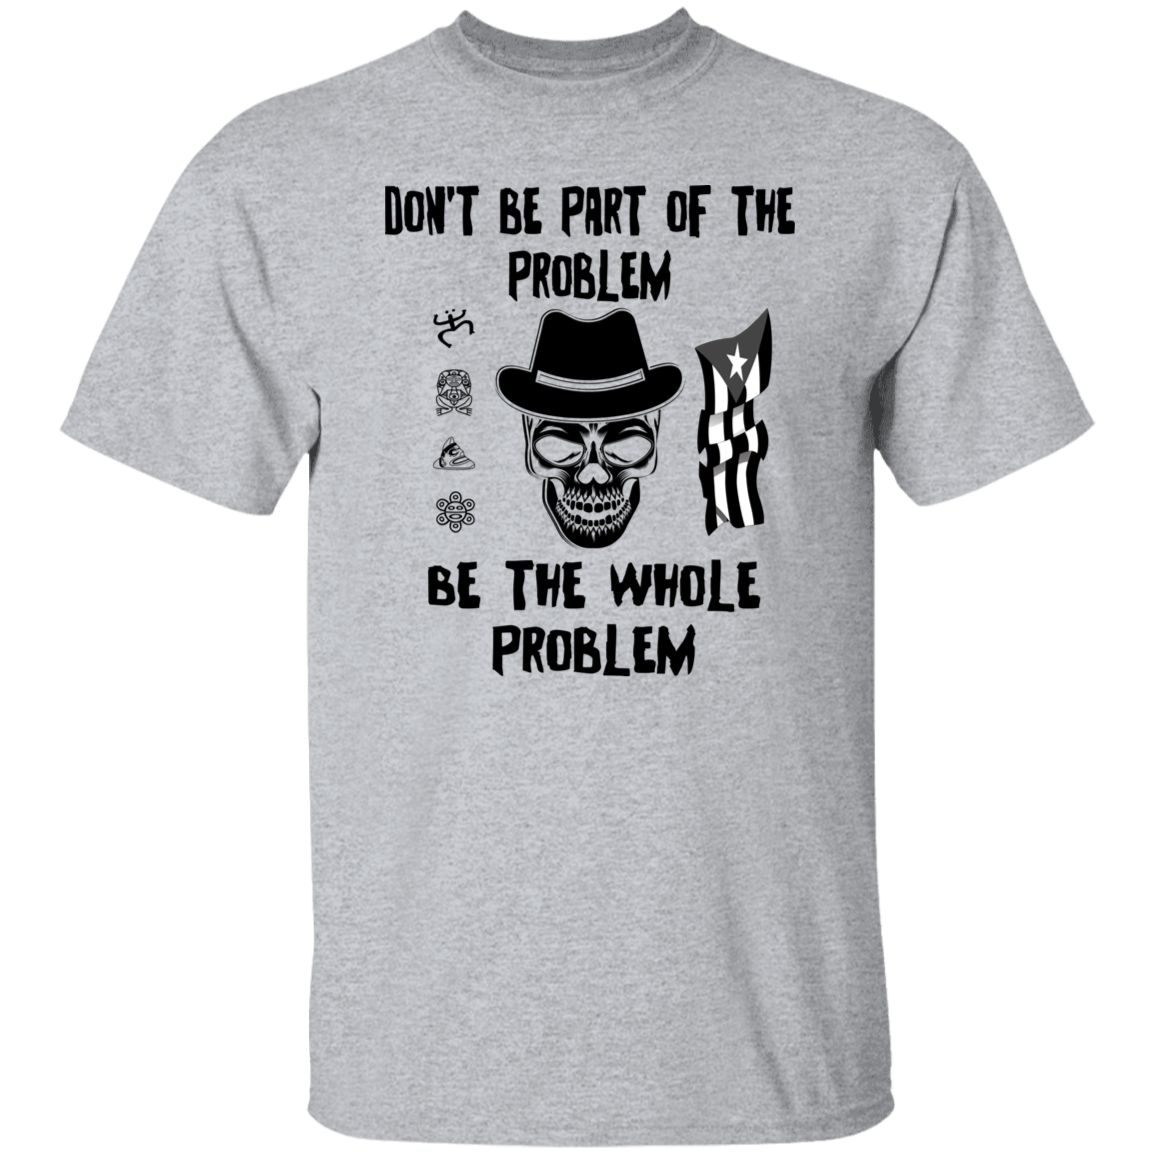 Be The Whole Problem 5.3 oz. T-Shirt